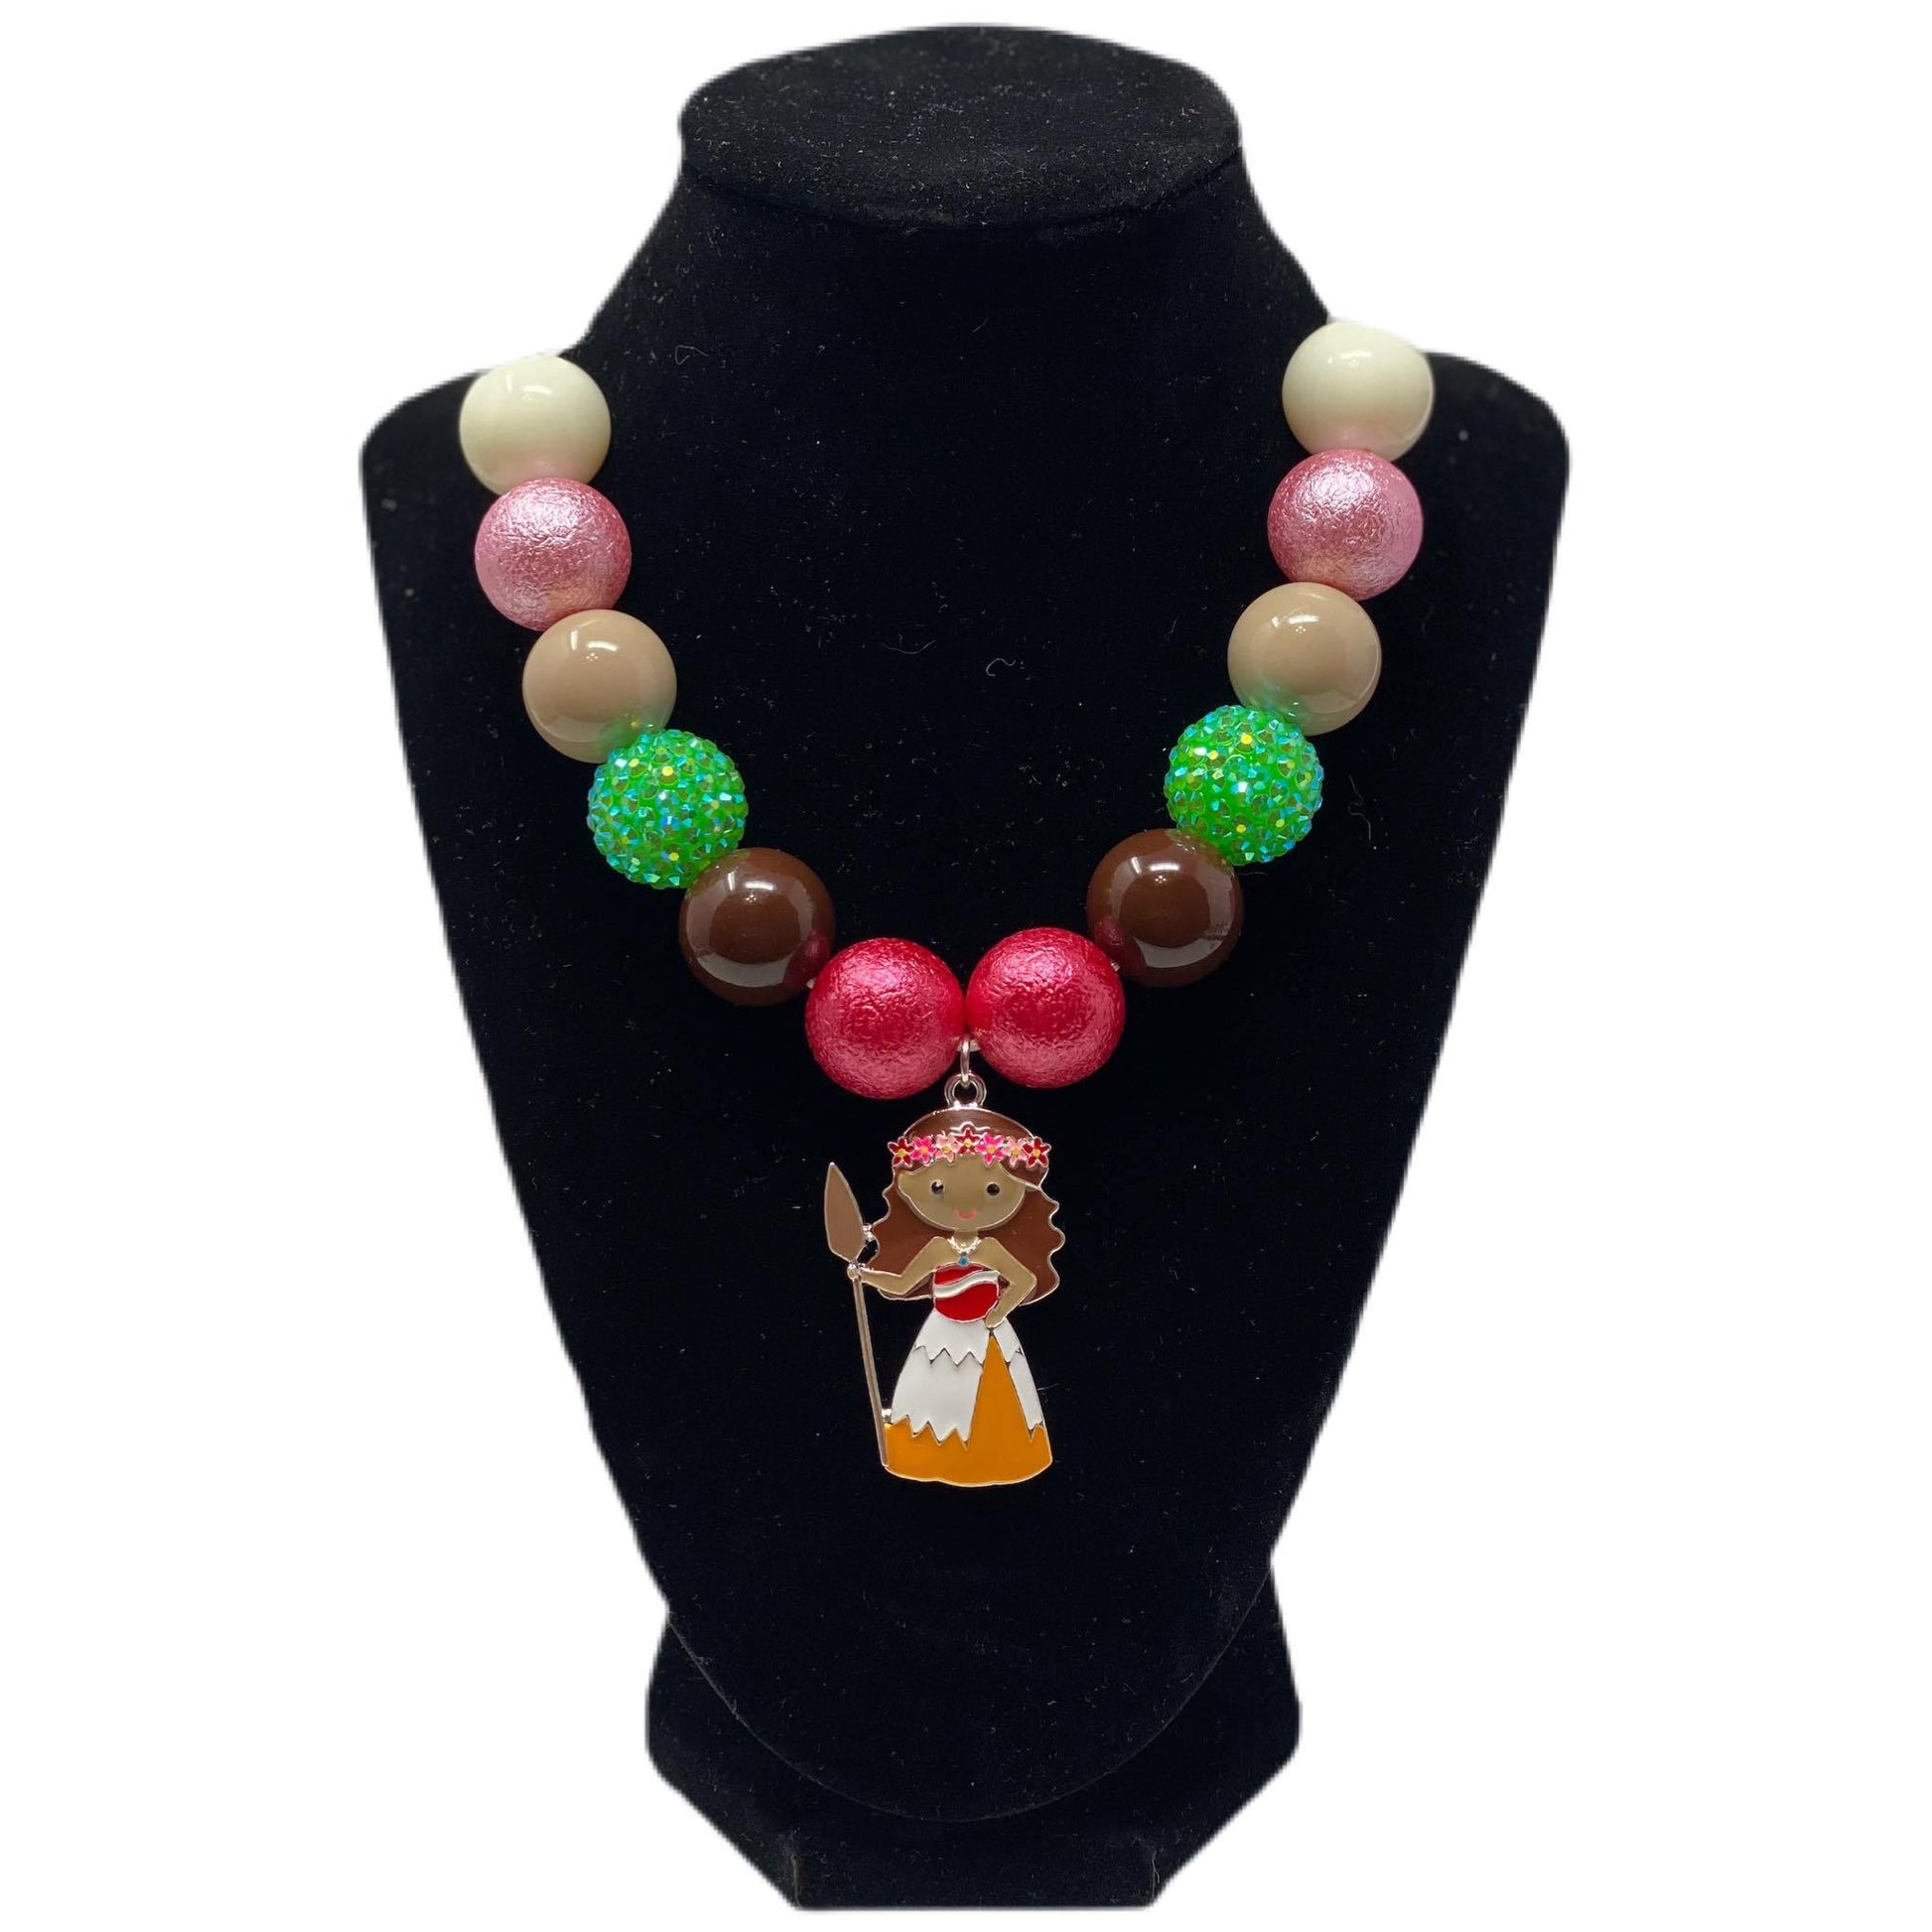 Princess Bubblegum Necklace with Island Princess Pendant